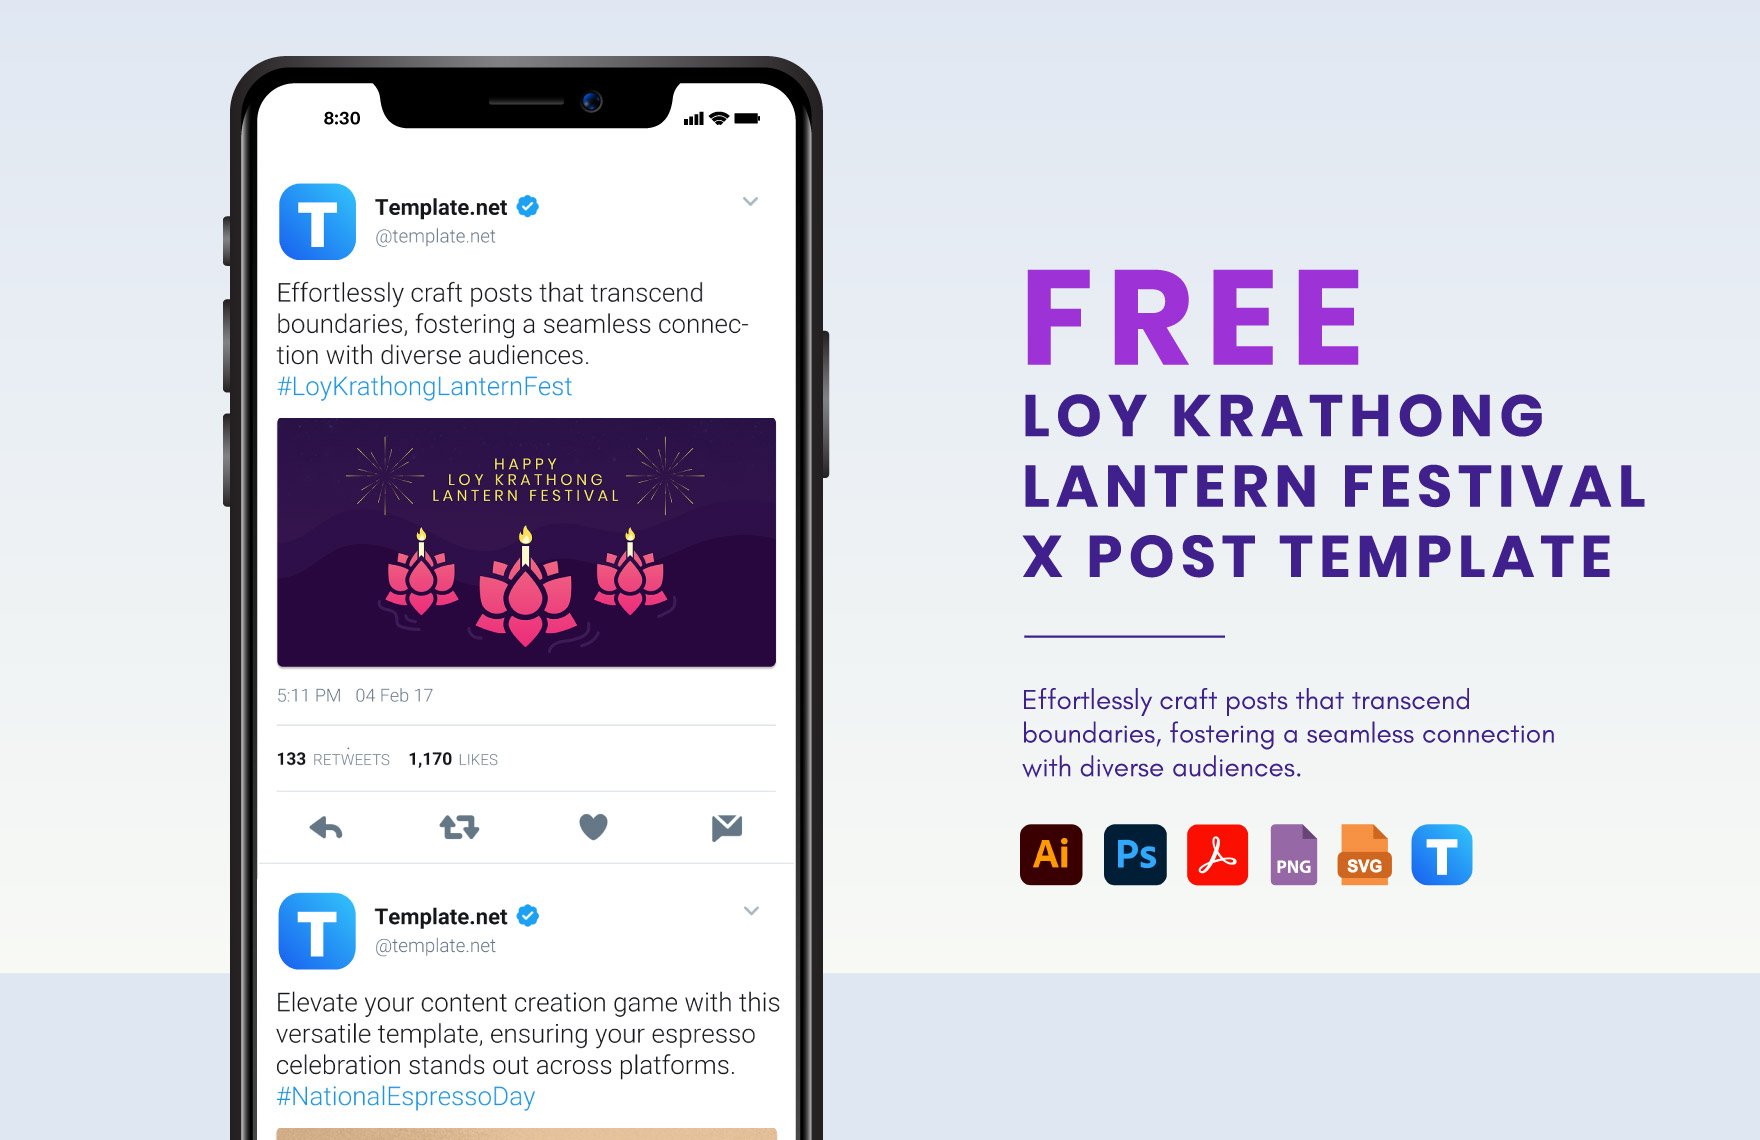 Loy Krathong Lantern Festival X Post Template